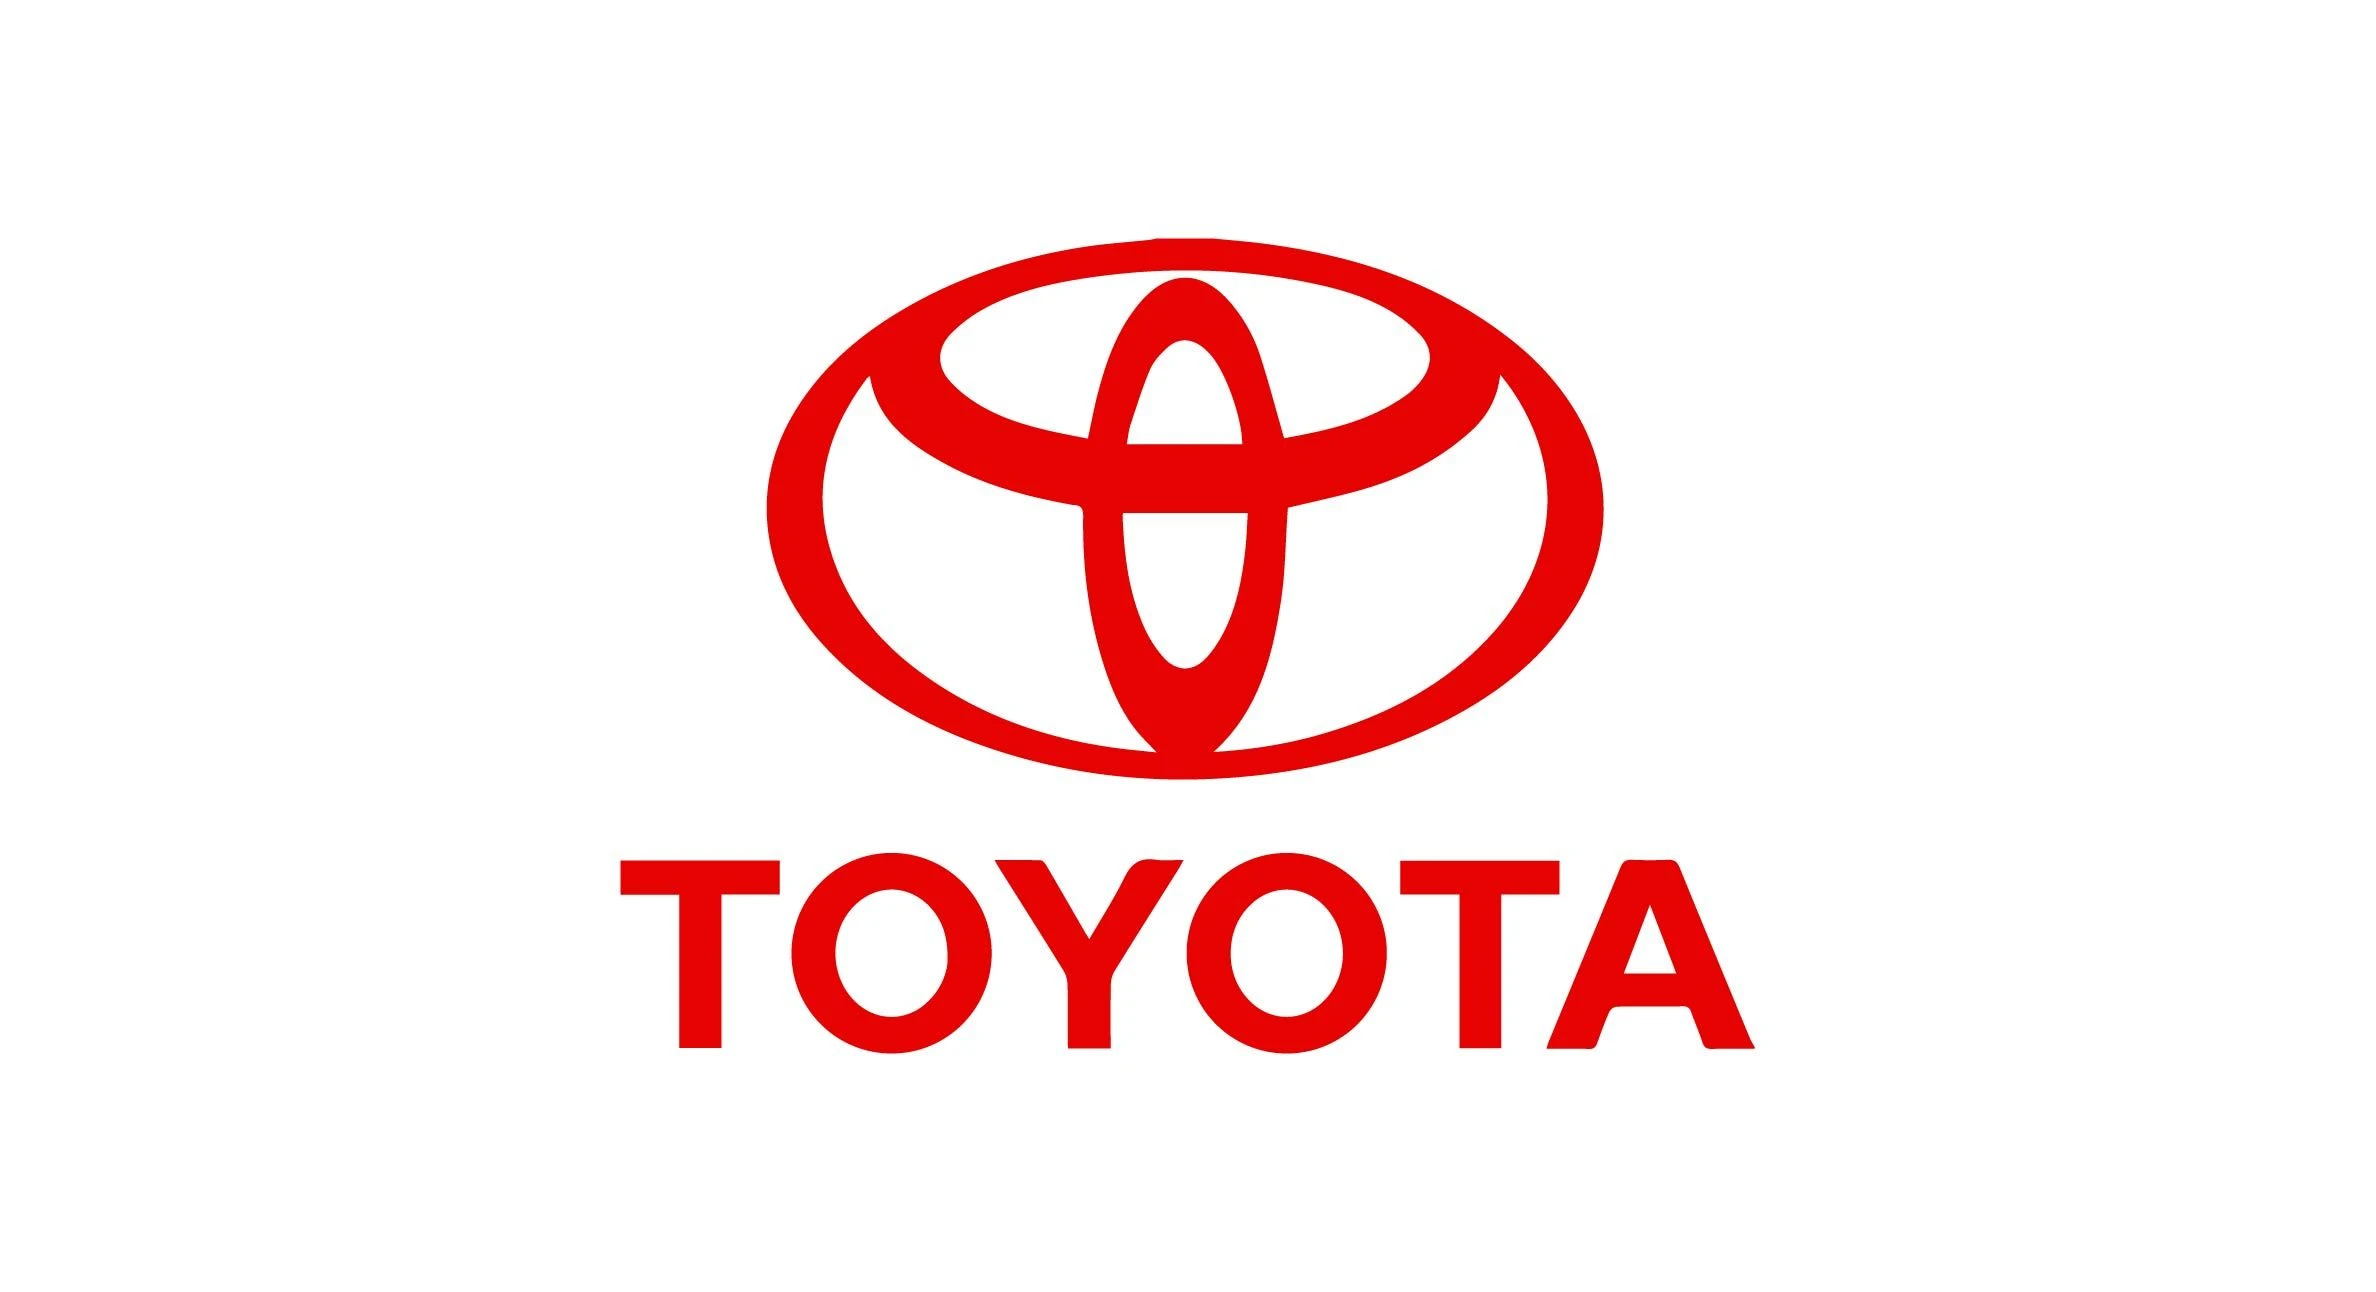 Toyota car brand logo